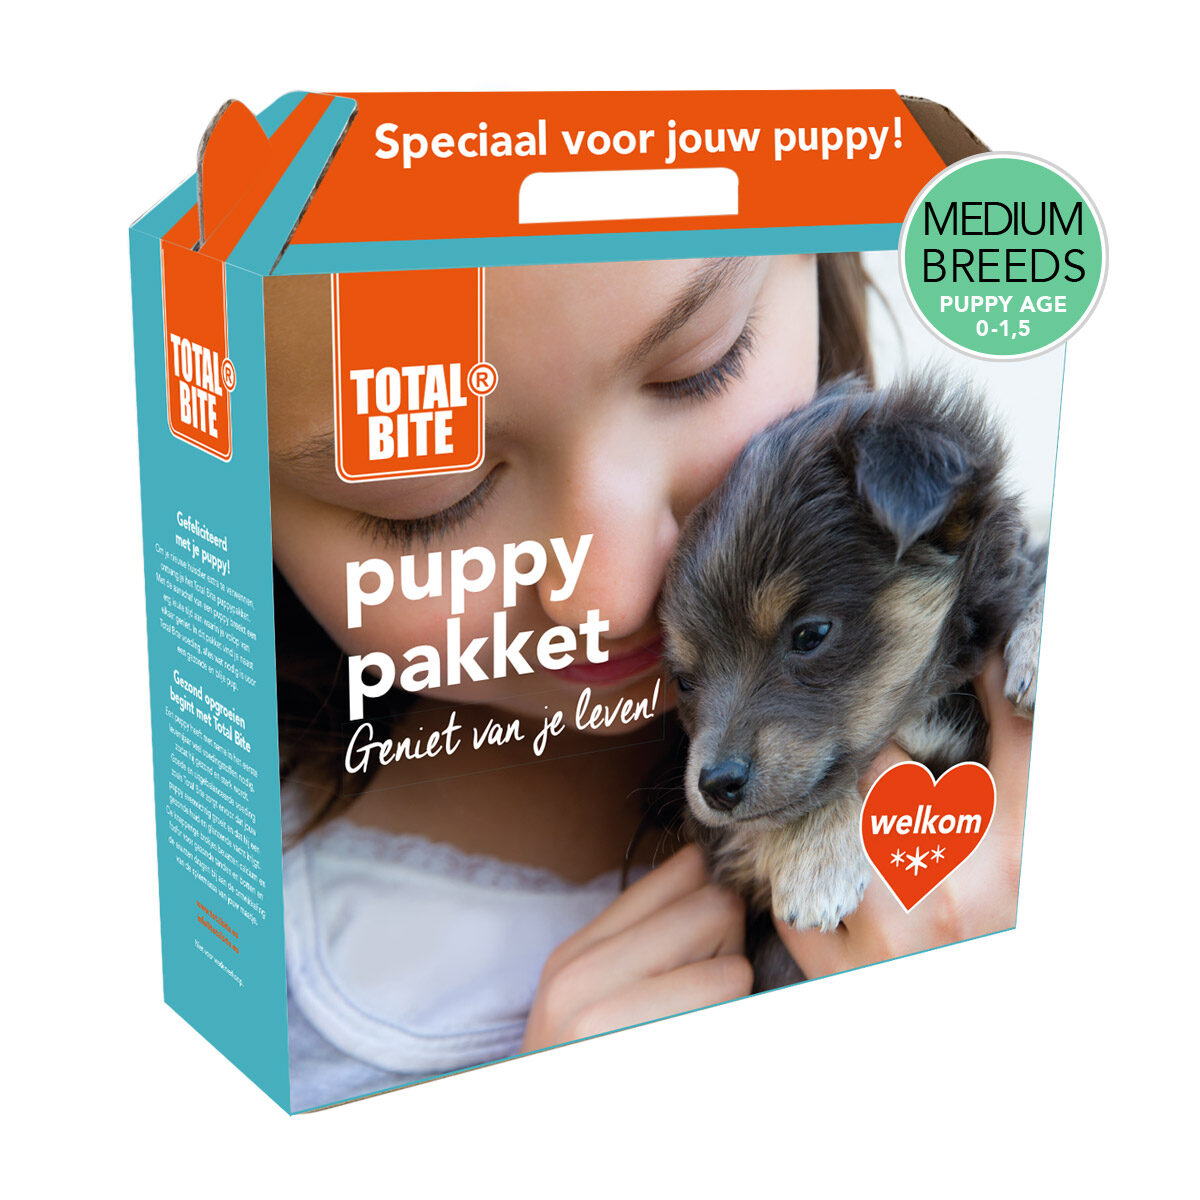 total-bite-puppy-pakket-medium-breeds